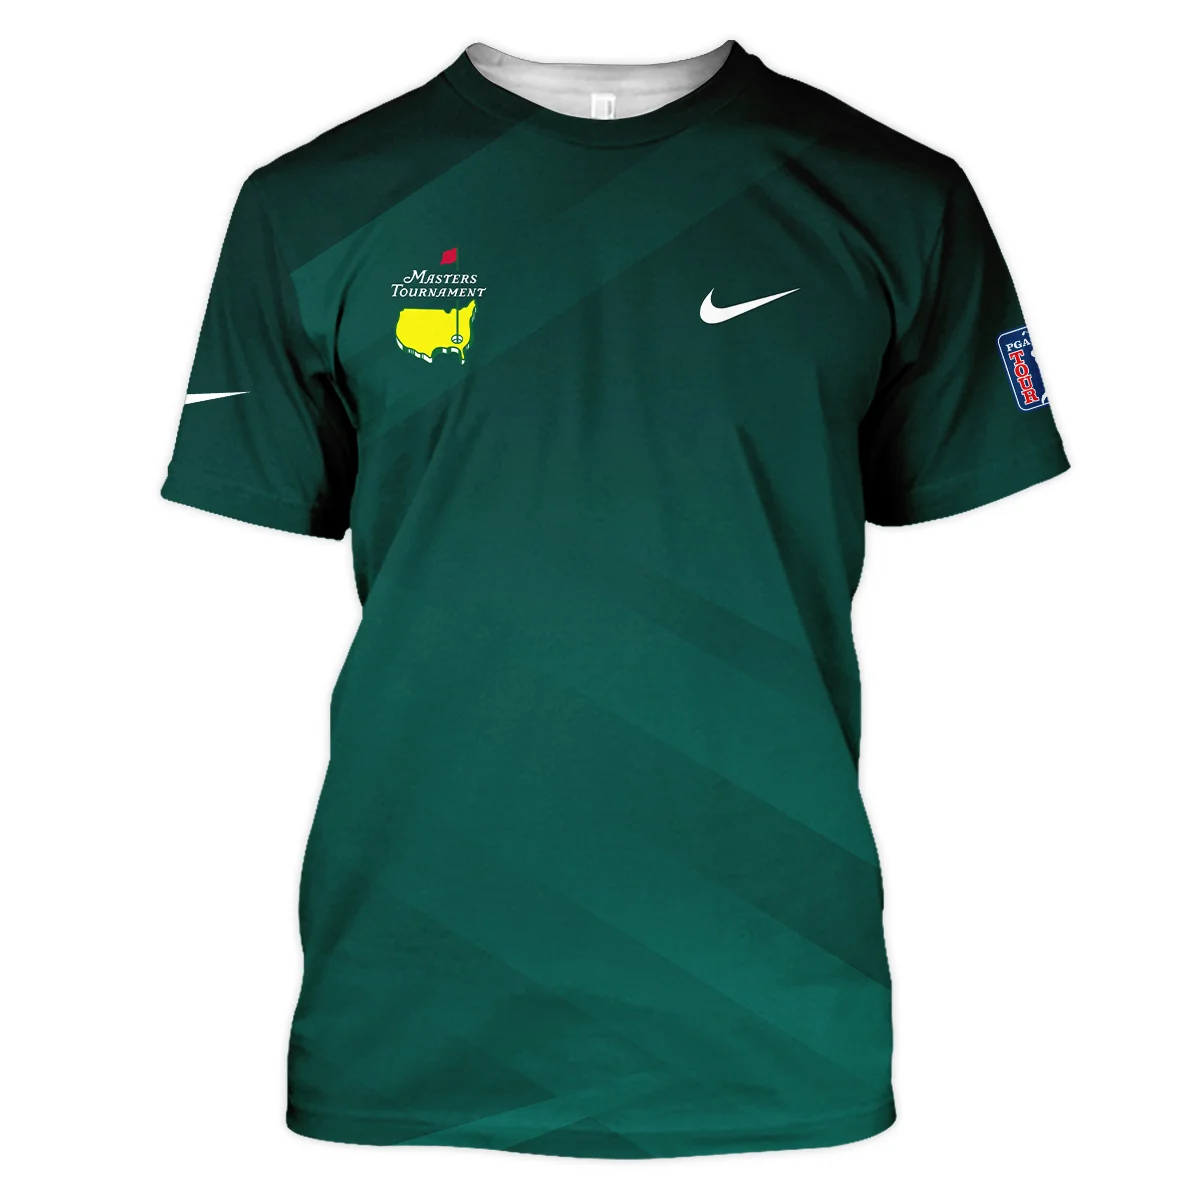 Masters Tournament Dark Green Gradient Golf Sport Nike Vneck Long Polo Shirt Style Classic Long Polo Shirt For Men